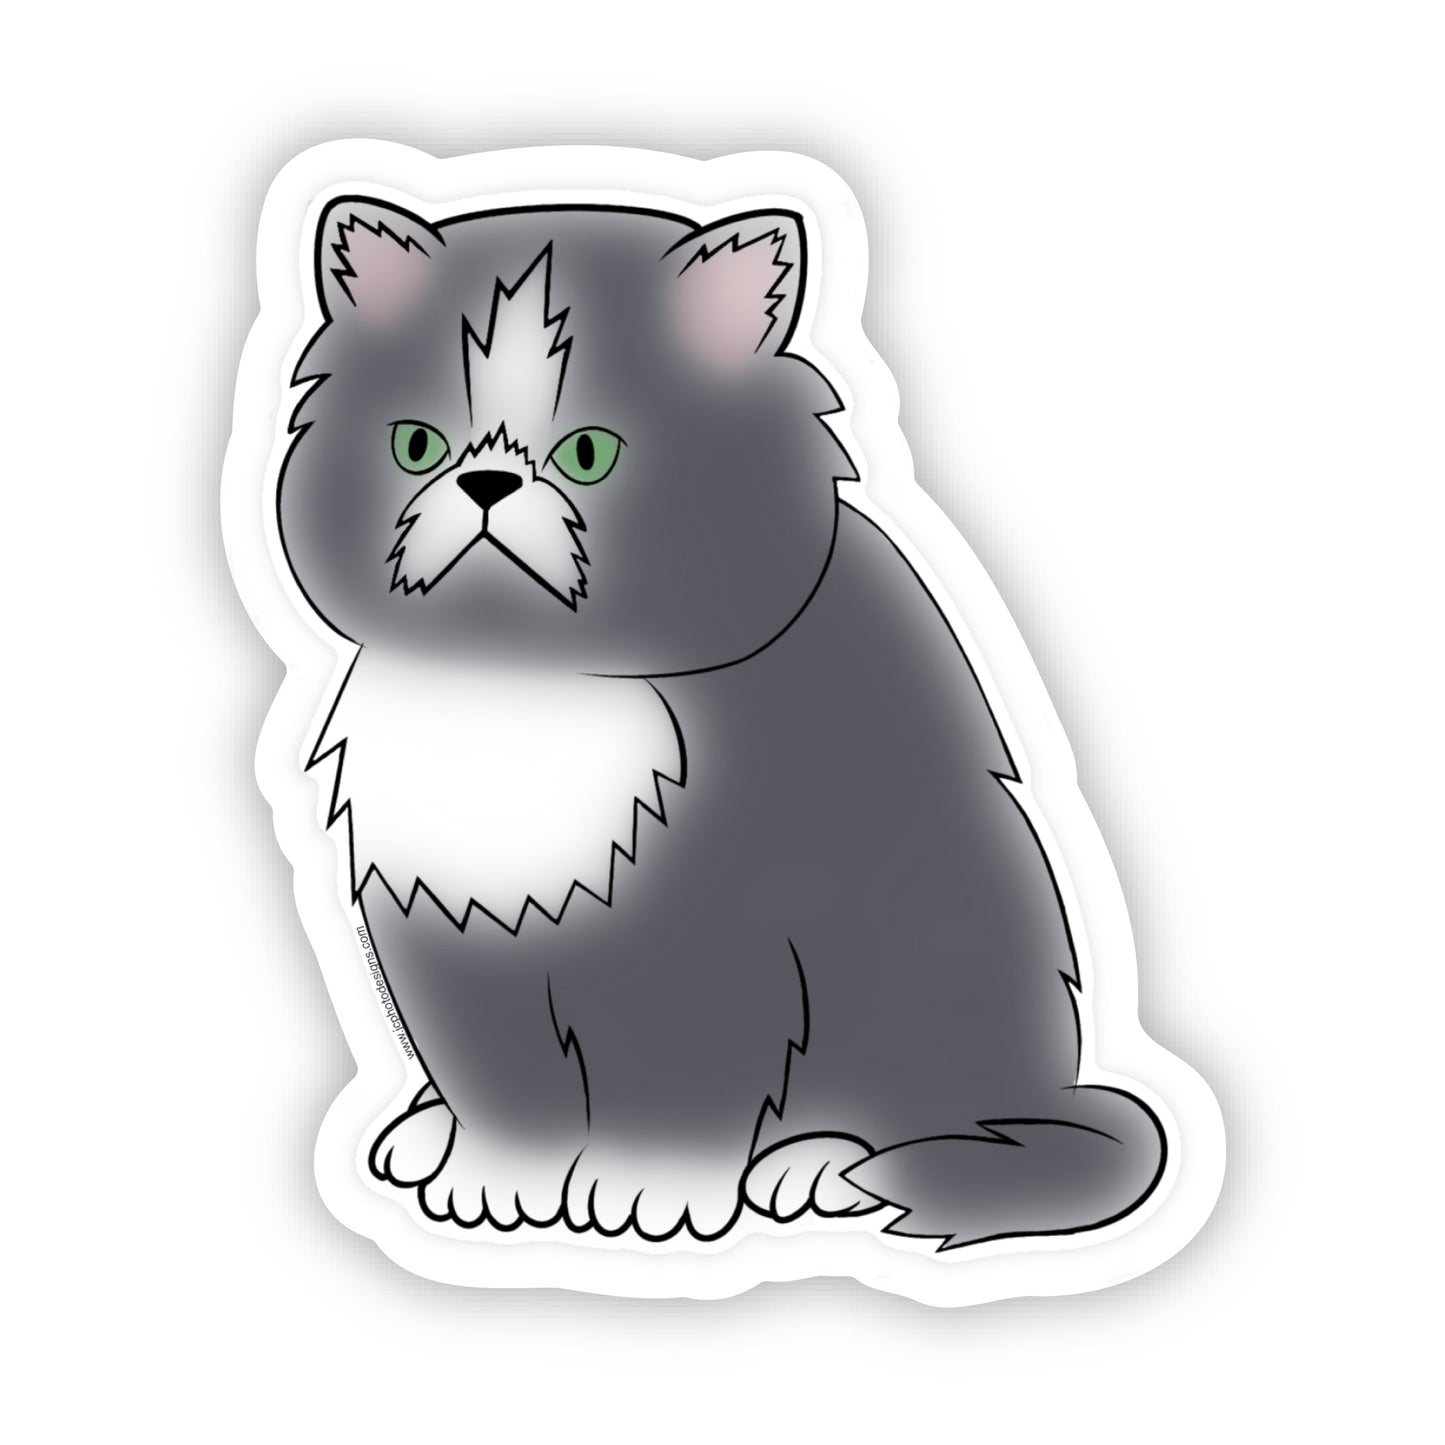 Regal Persian Cat Sticker - Lush-Furred Feline with Green Eyes Sticker